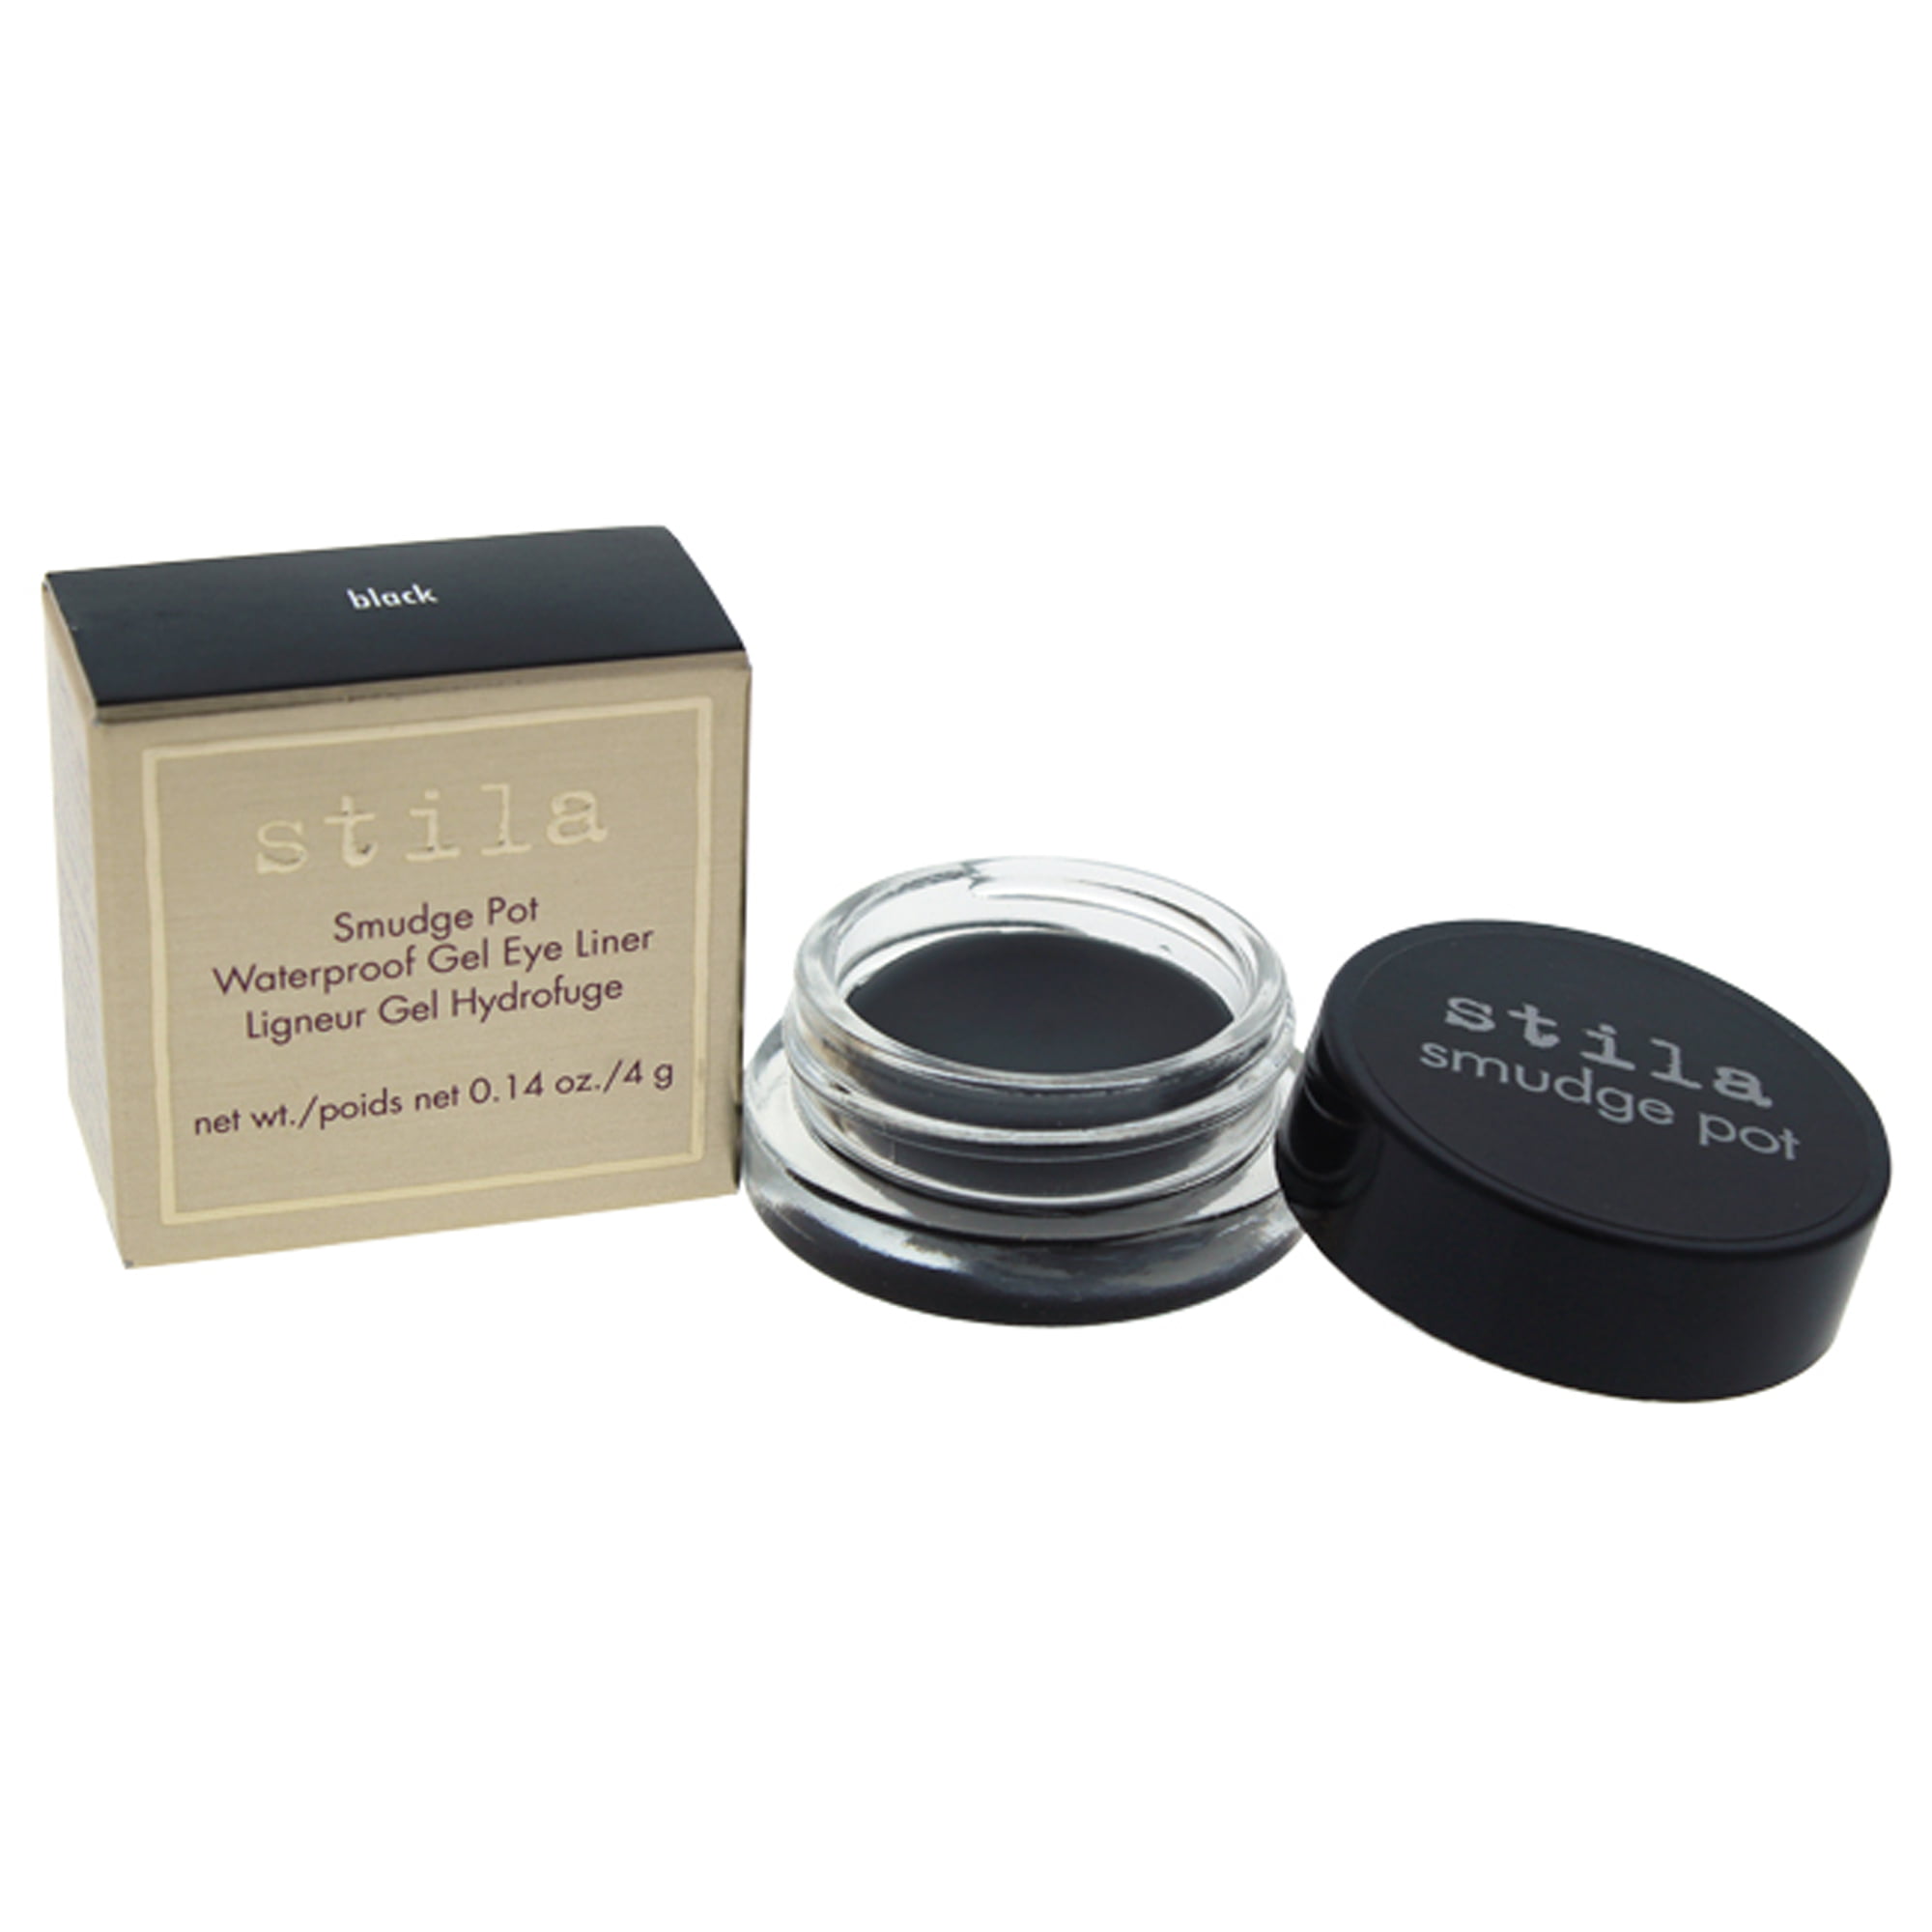 Stila Smudge Pots Waterproof Gel Eye Liner Black - Pack of 2, 0.14 oz Eyeliner Walmart.com